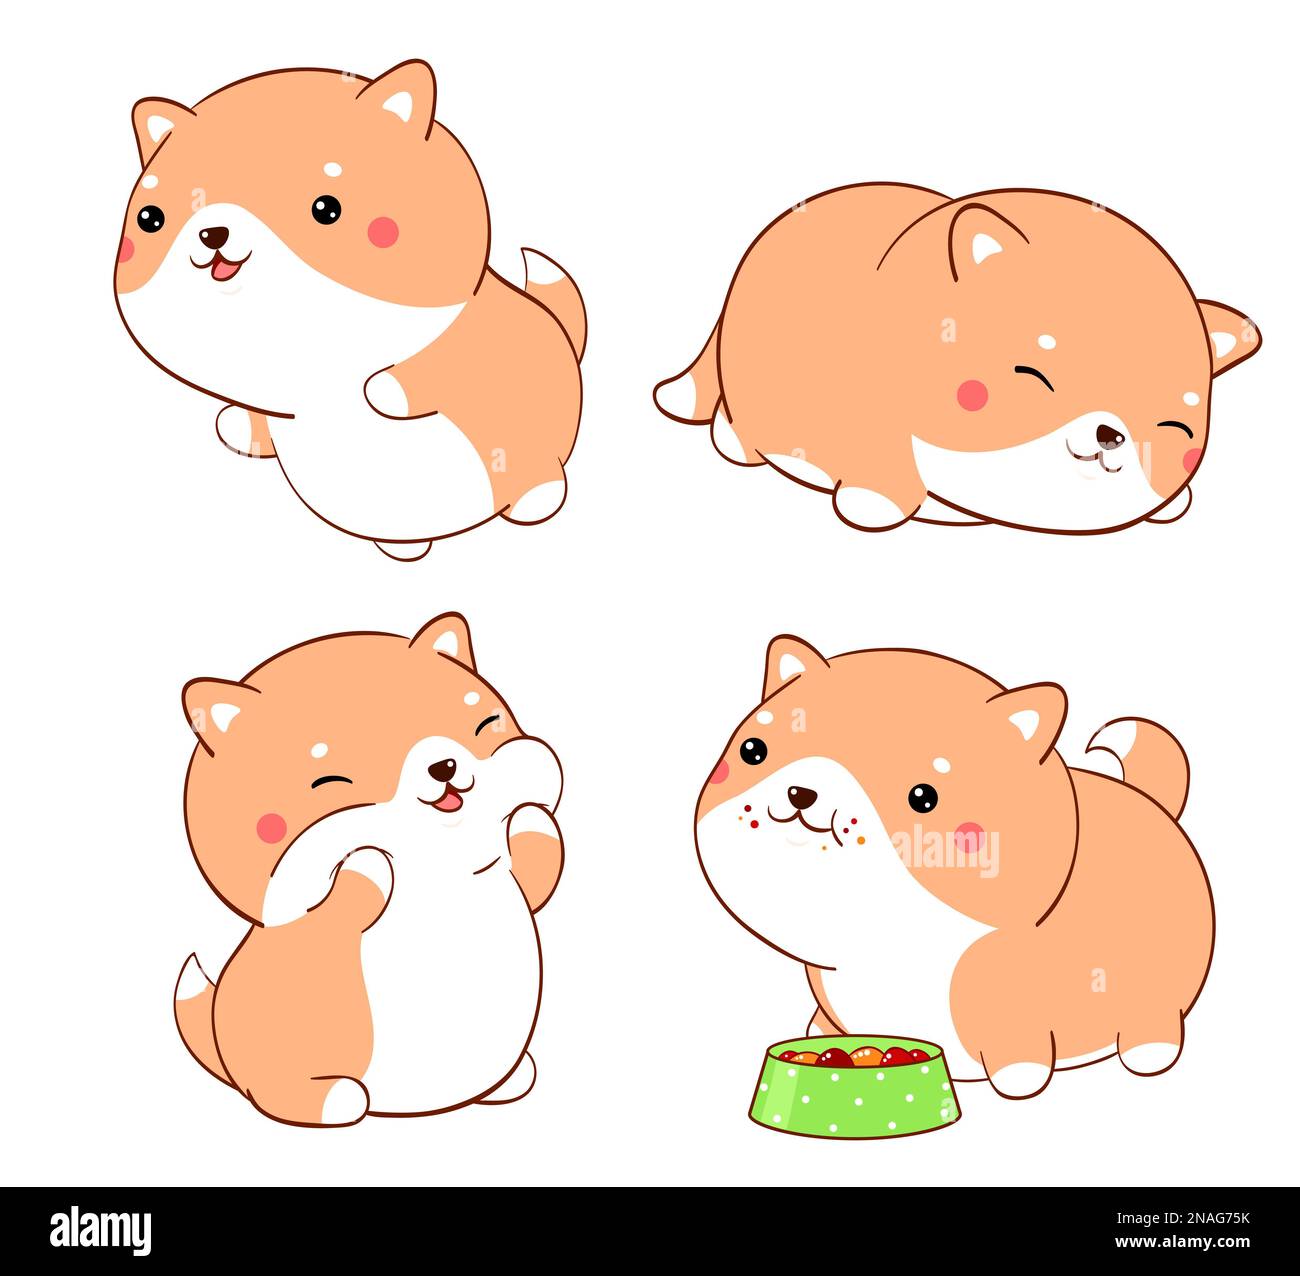 Amazoncom Cool Anime  Dog  Domestic Dog Stuff Cute AnimeHusky Puppy Dog Kawaii Japan Throw Pillow 16x16 Multicolor  Home  Kitchen